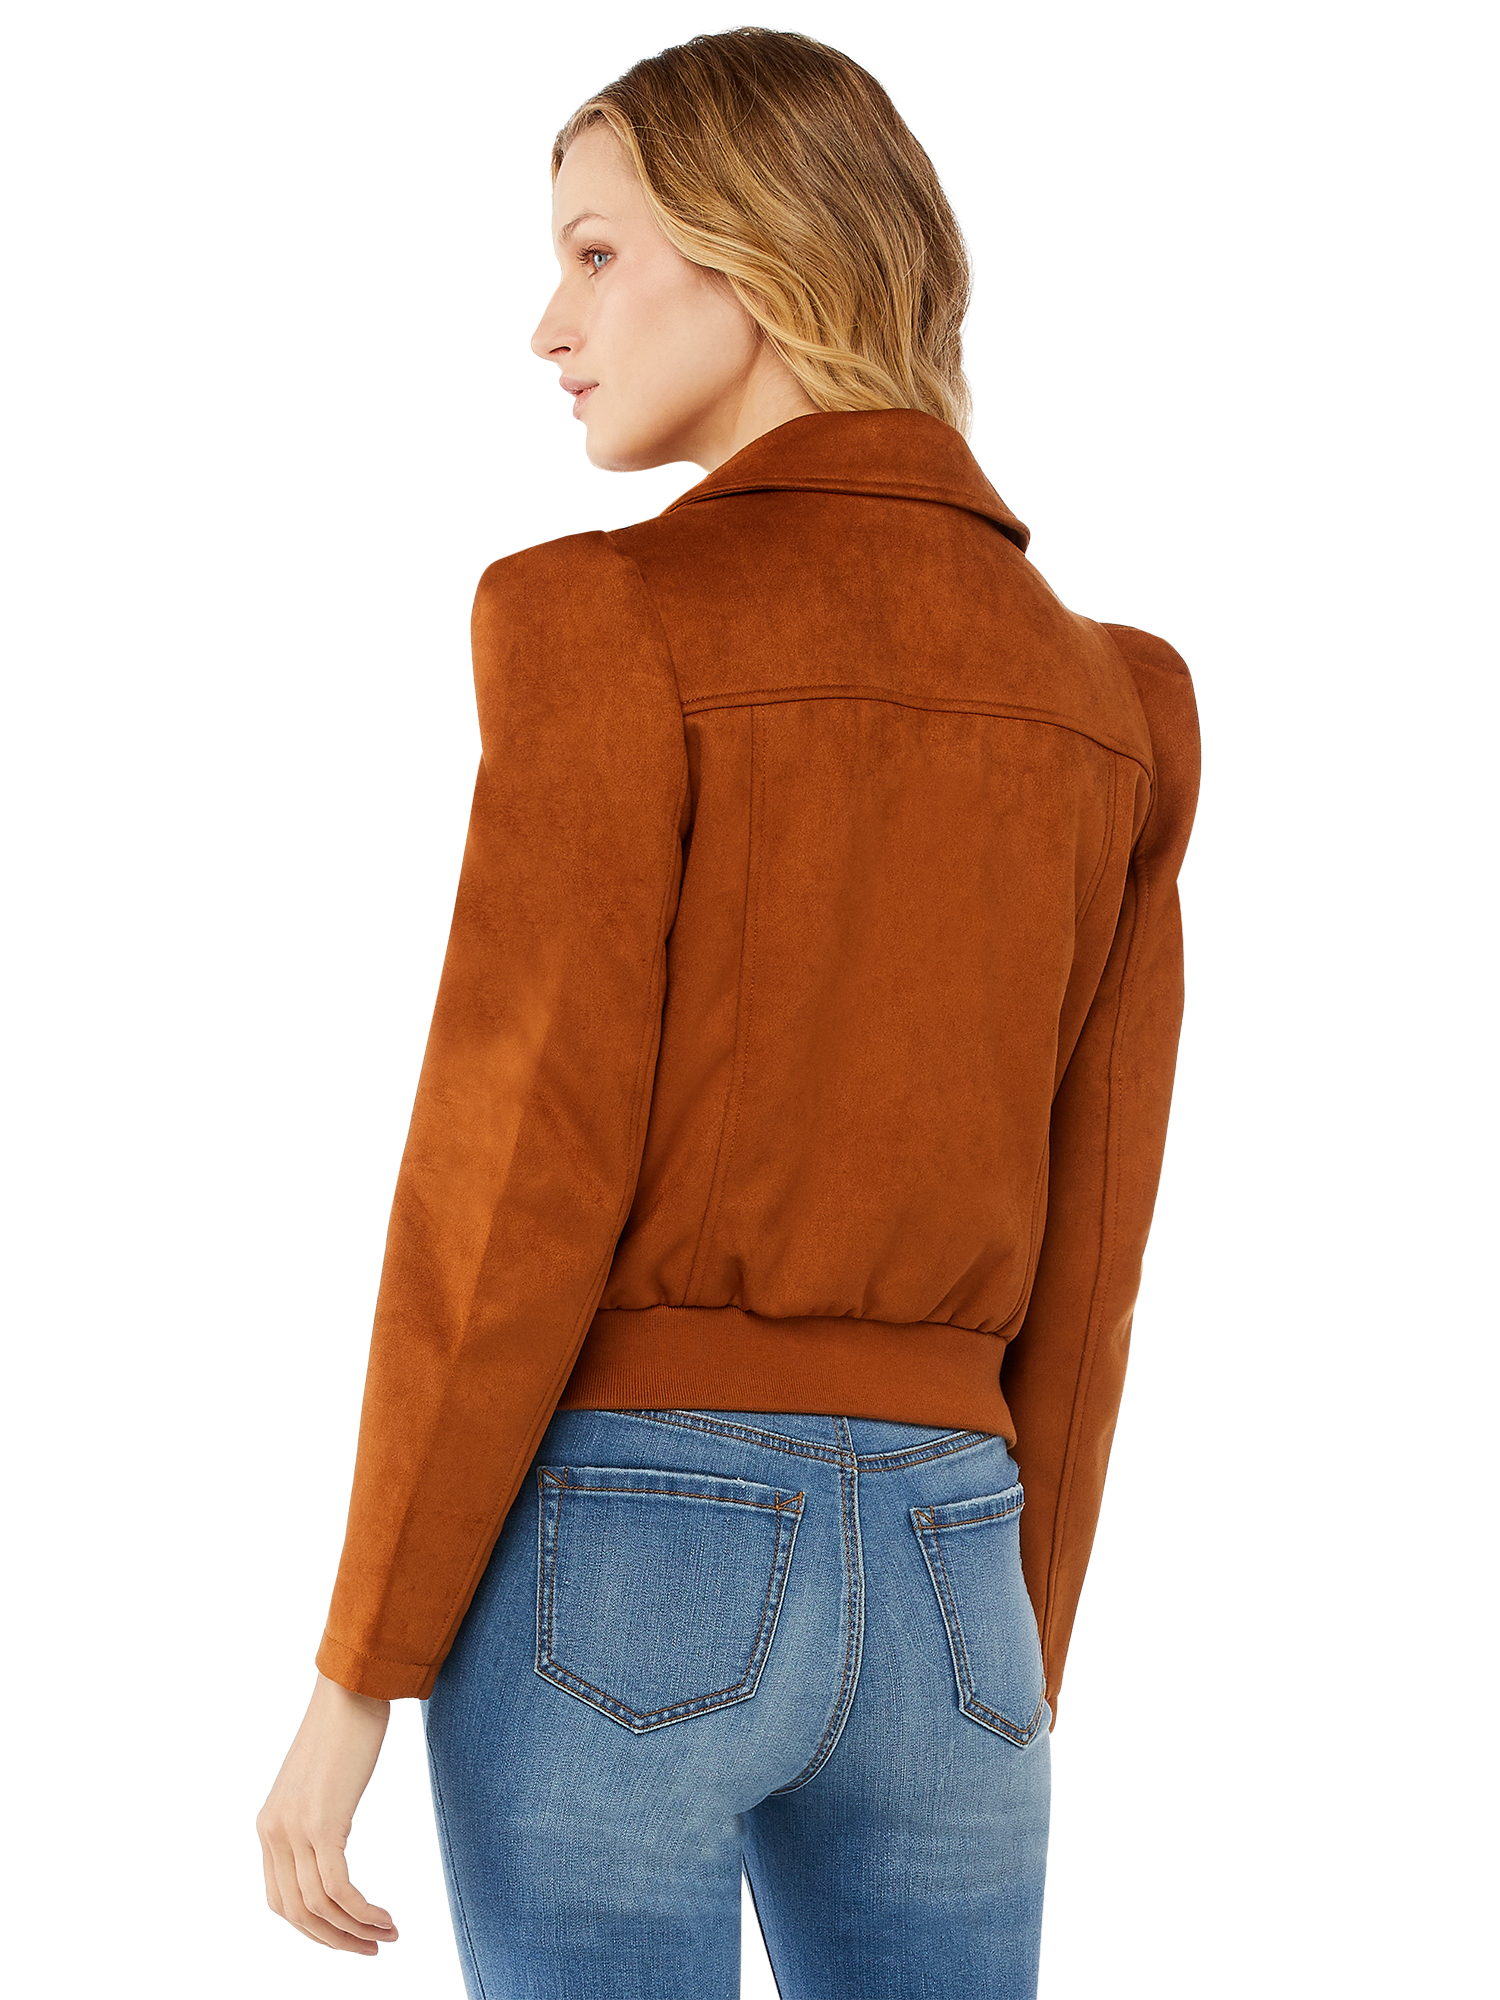 Scoop Long Sleeve Modern Fit Single-Breasted Jacket (Women's) 1 Pack - image 3 of 6